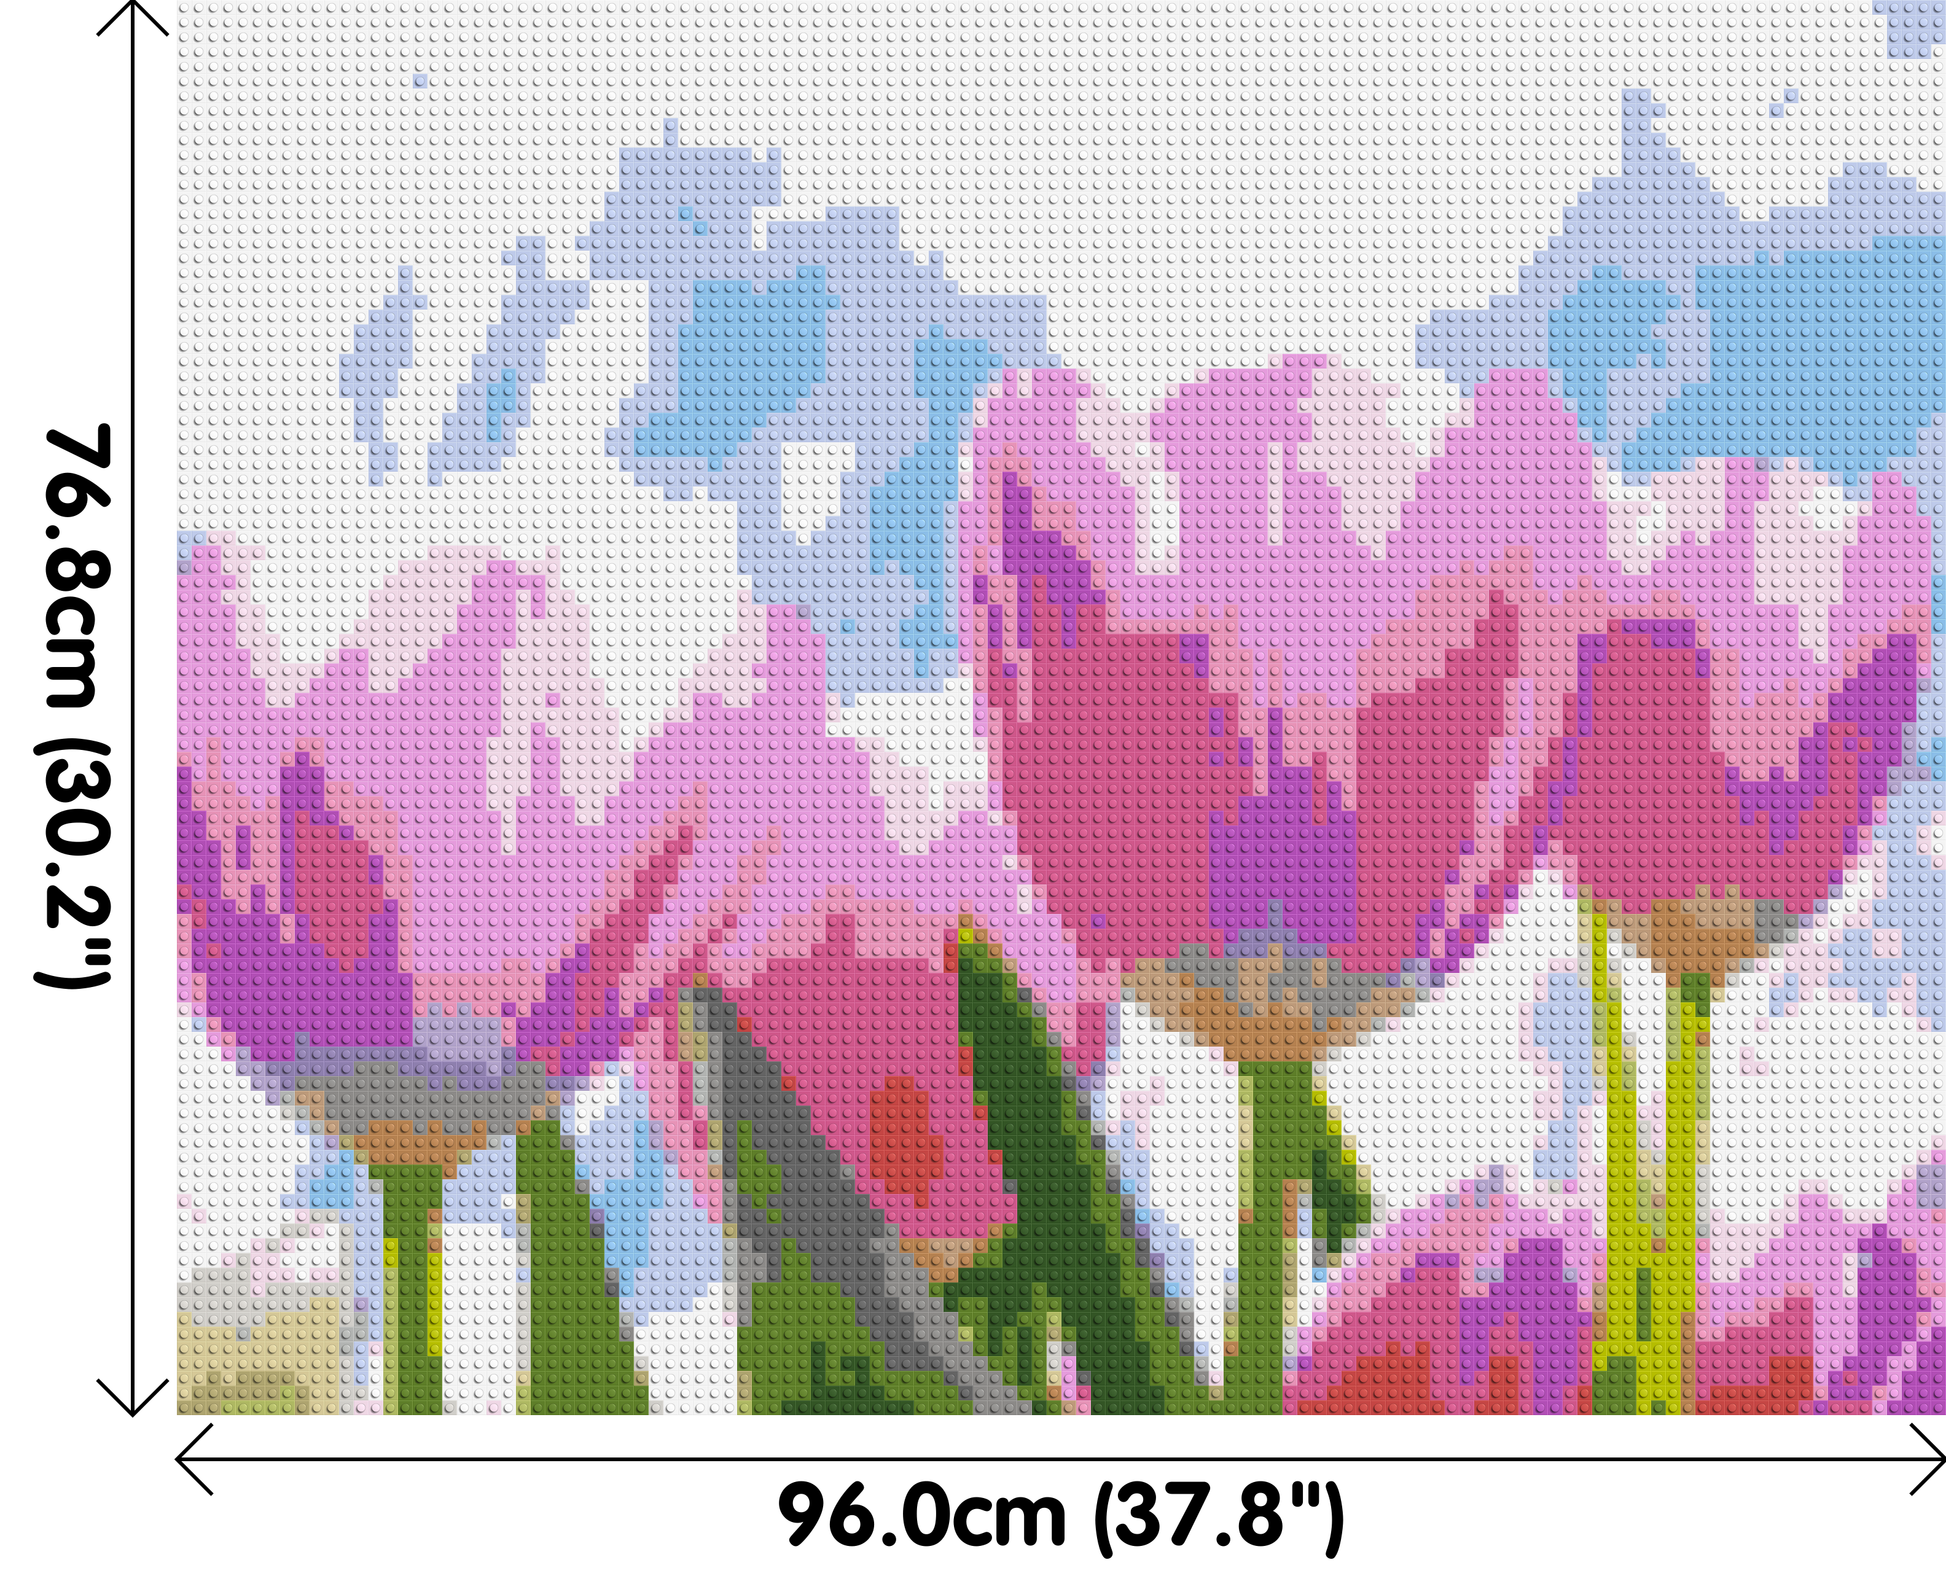 Pink Tulips - Brick Art Mosaic Kit 5x4 dimensions